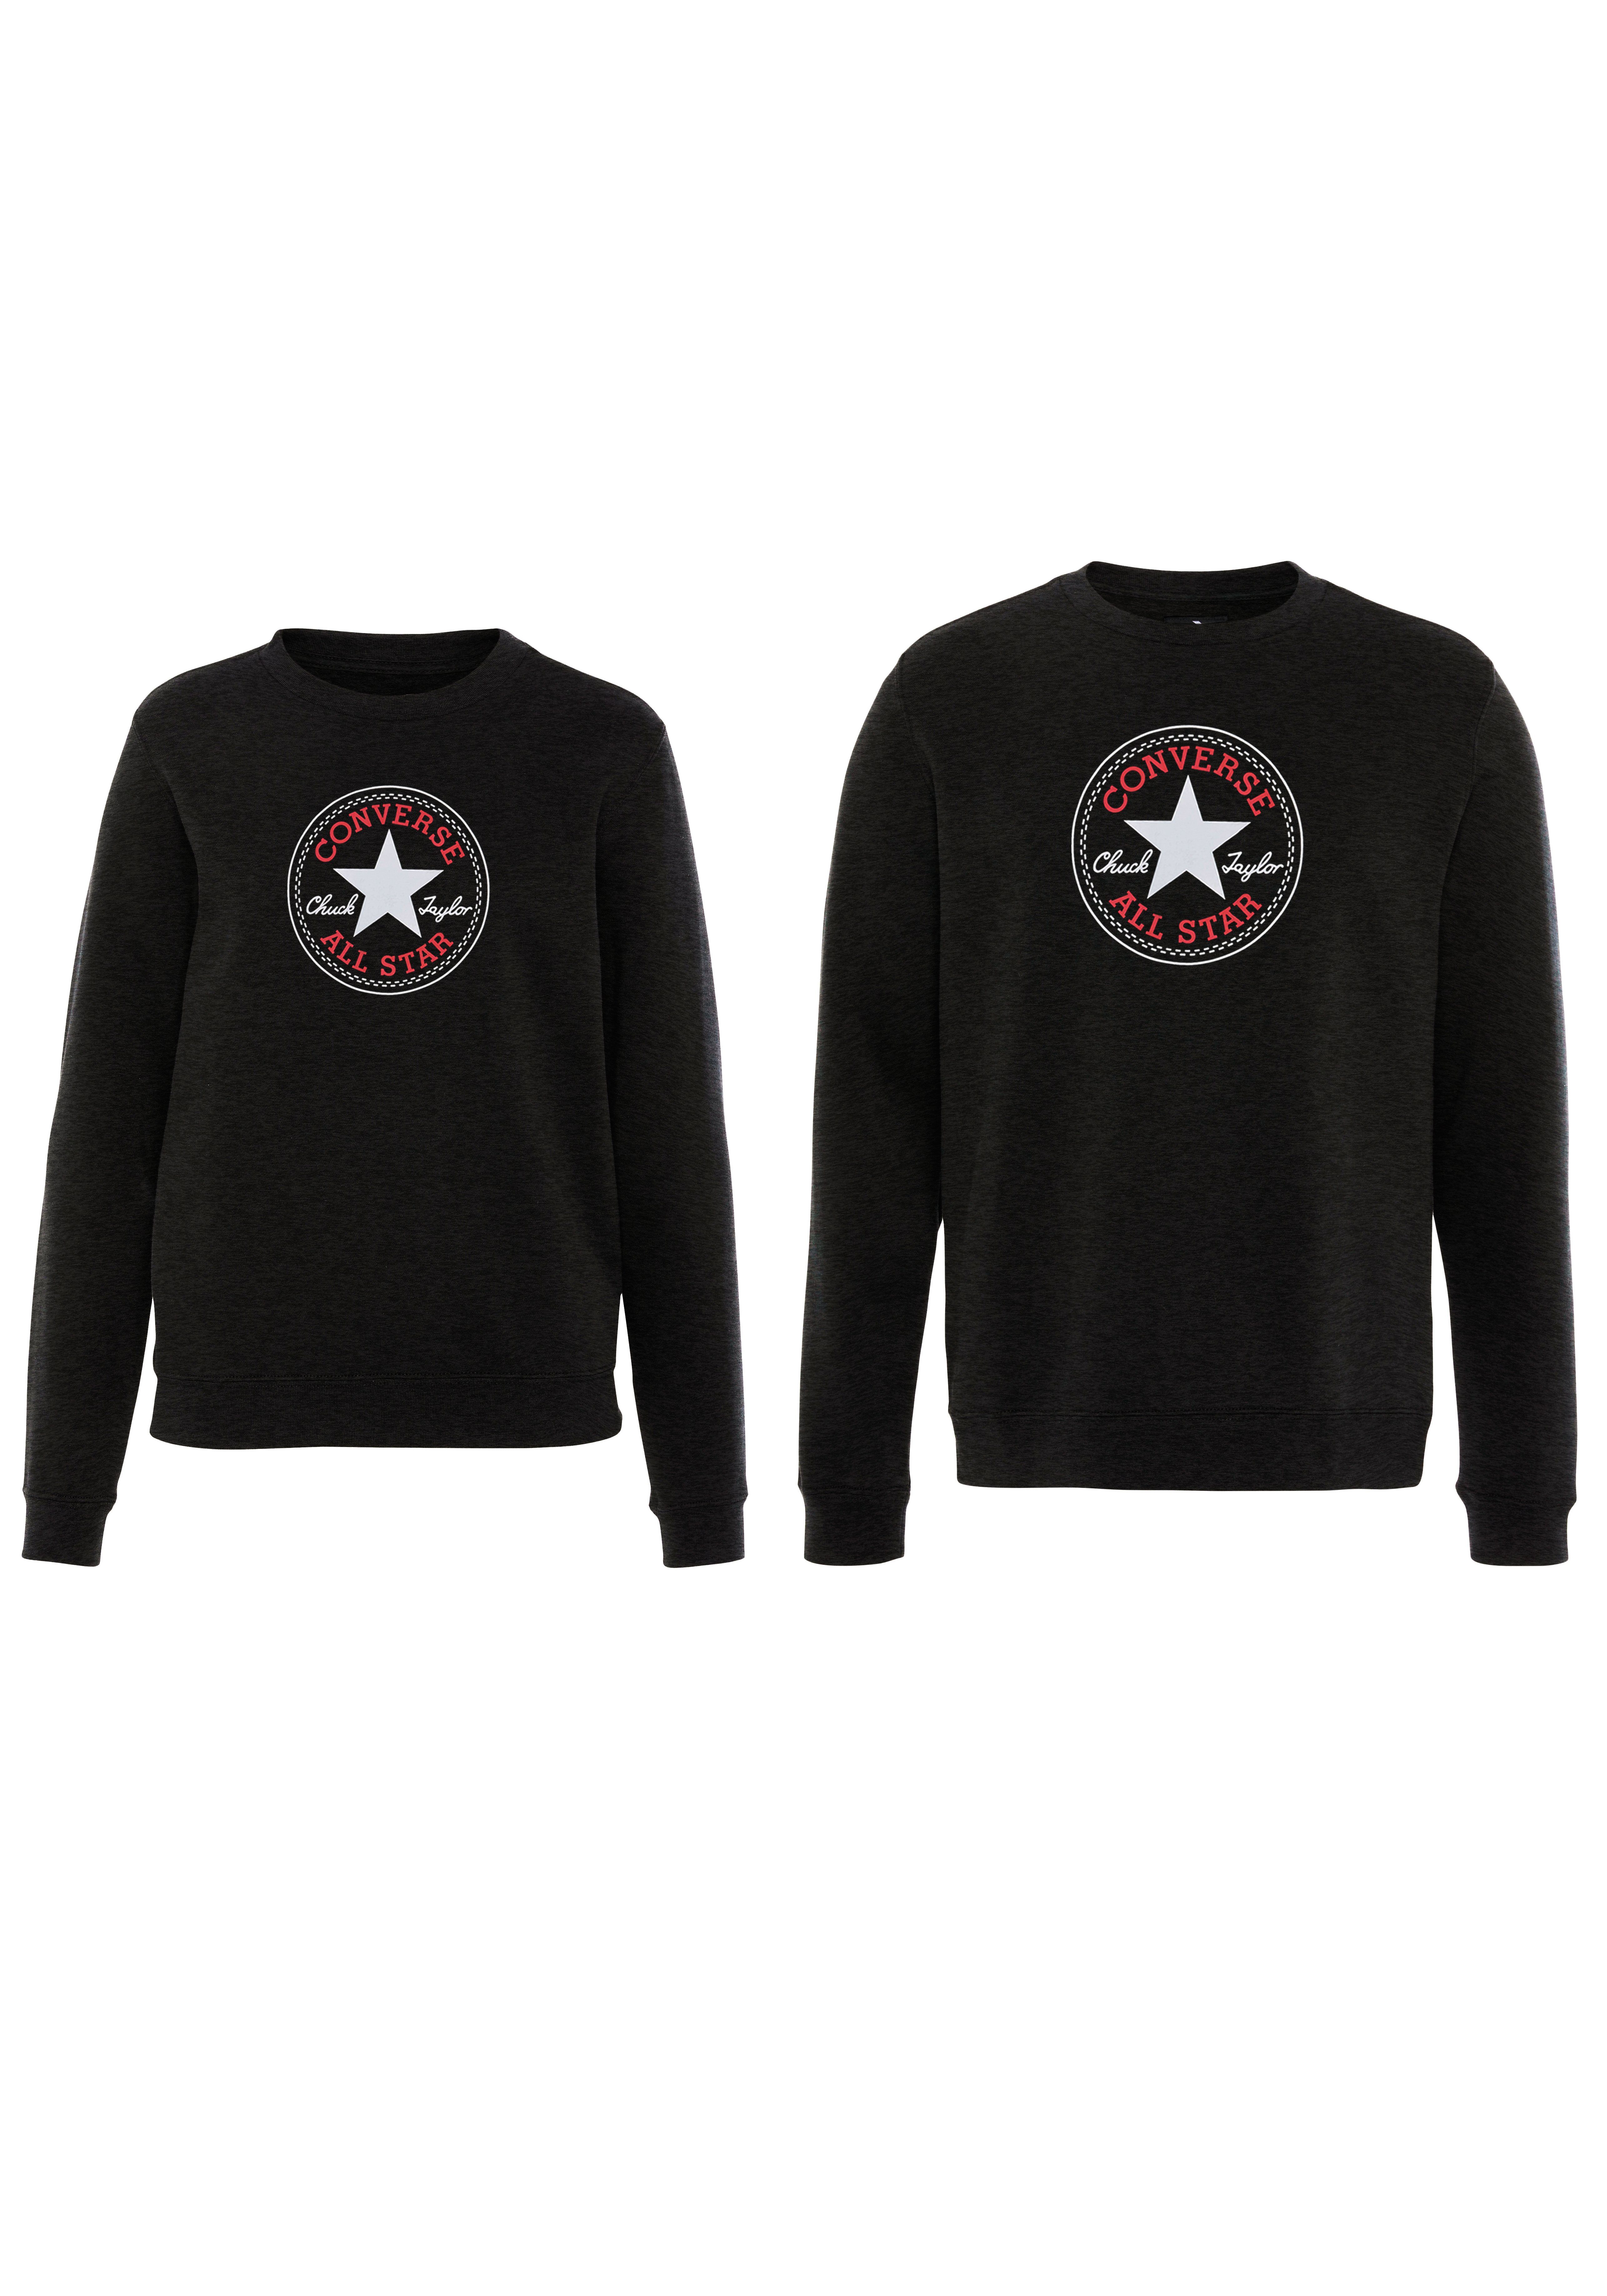 Converse UNISEX BRUSHED black1 Sweatshirt BACK ALL STAR PATCH